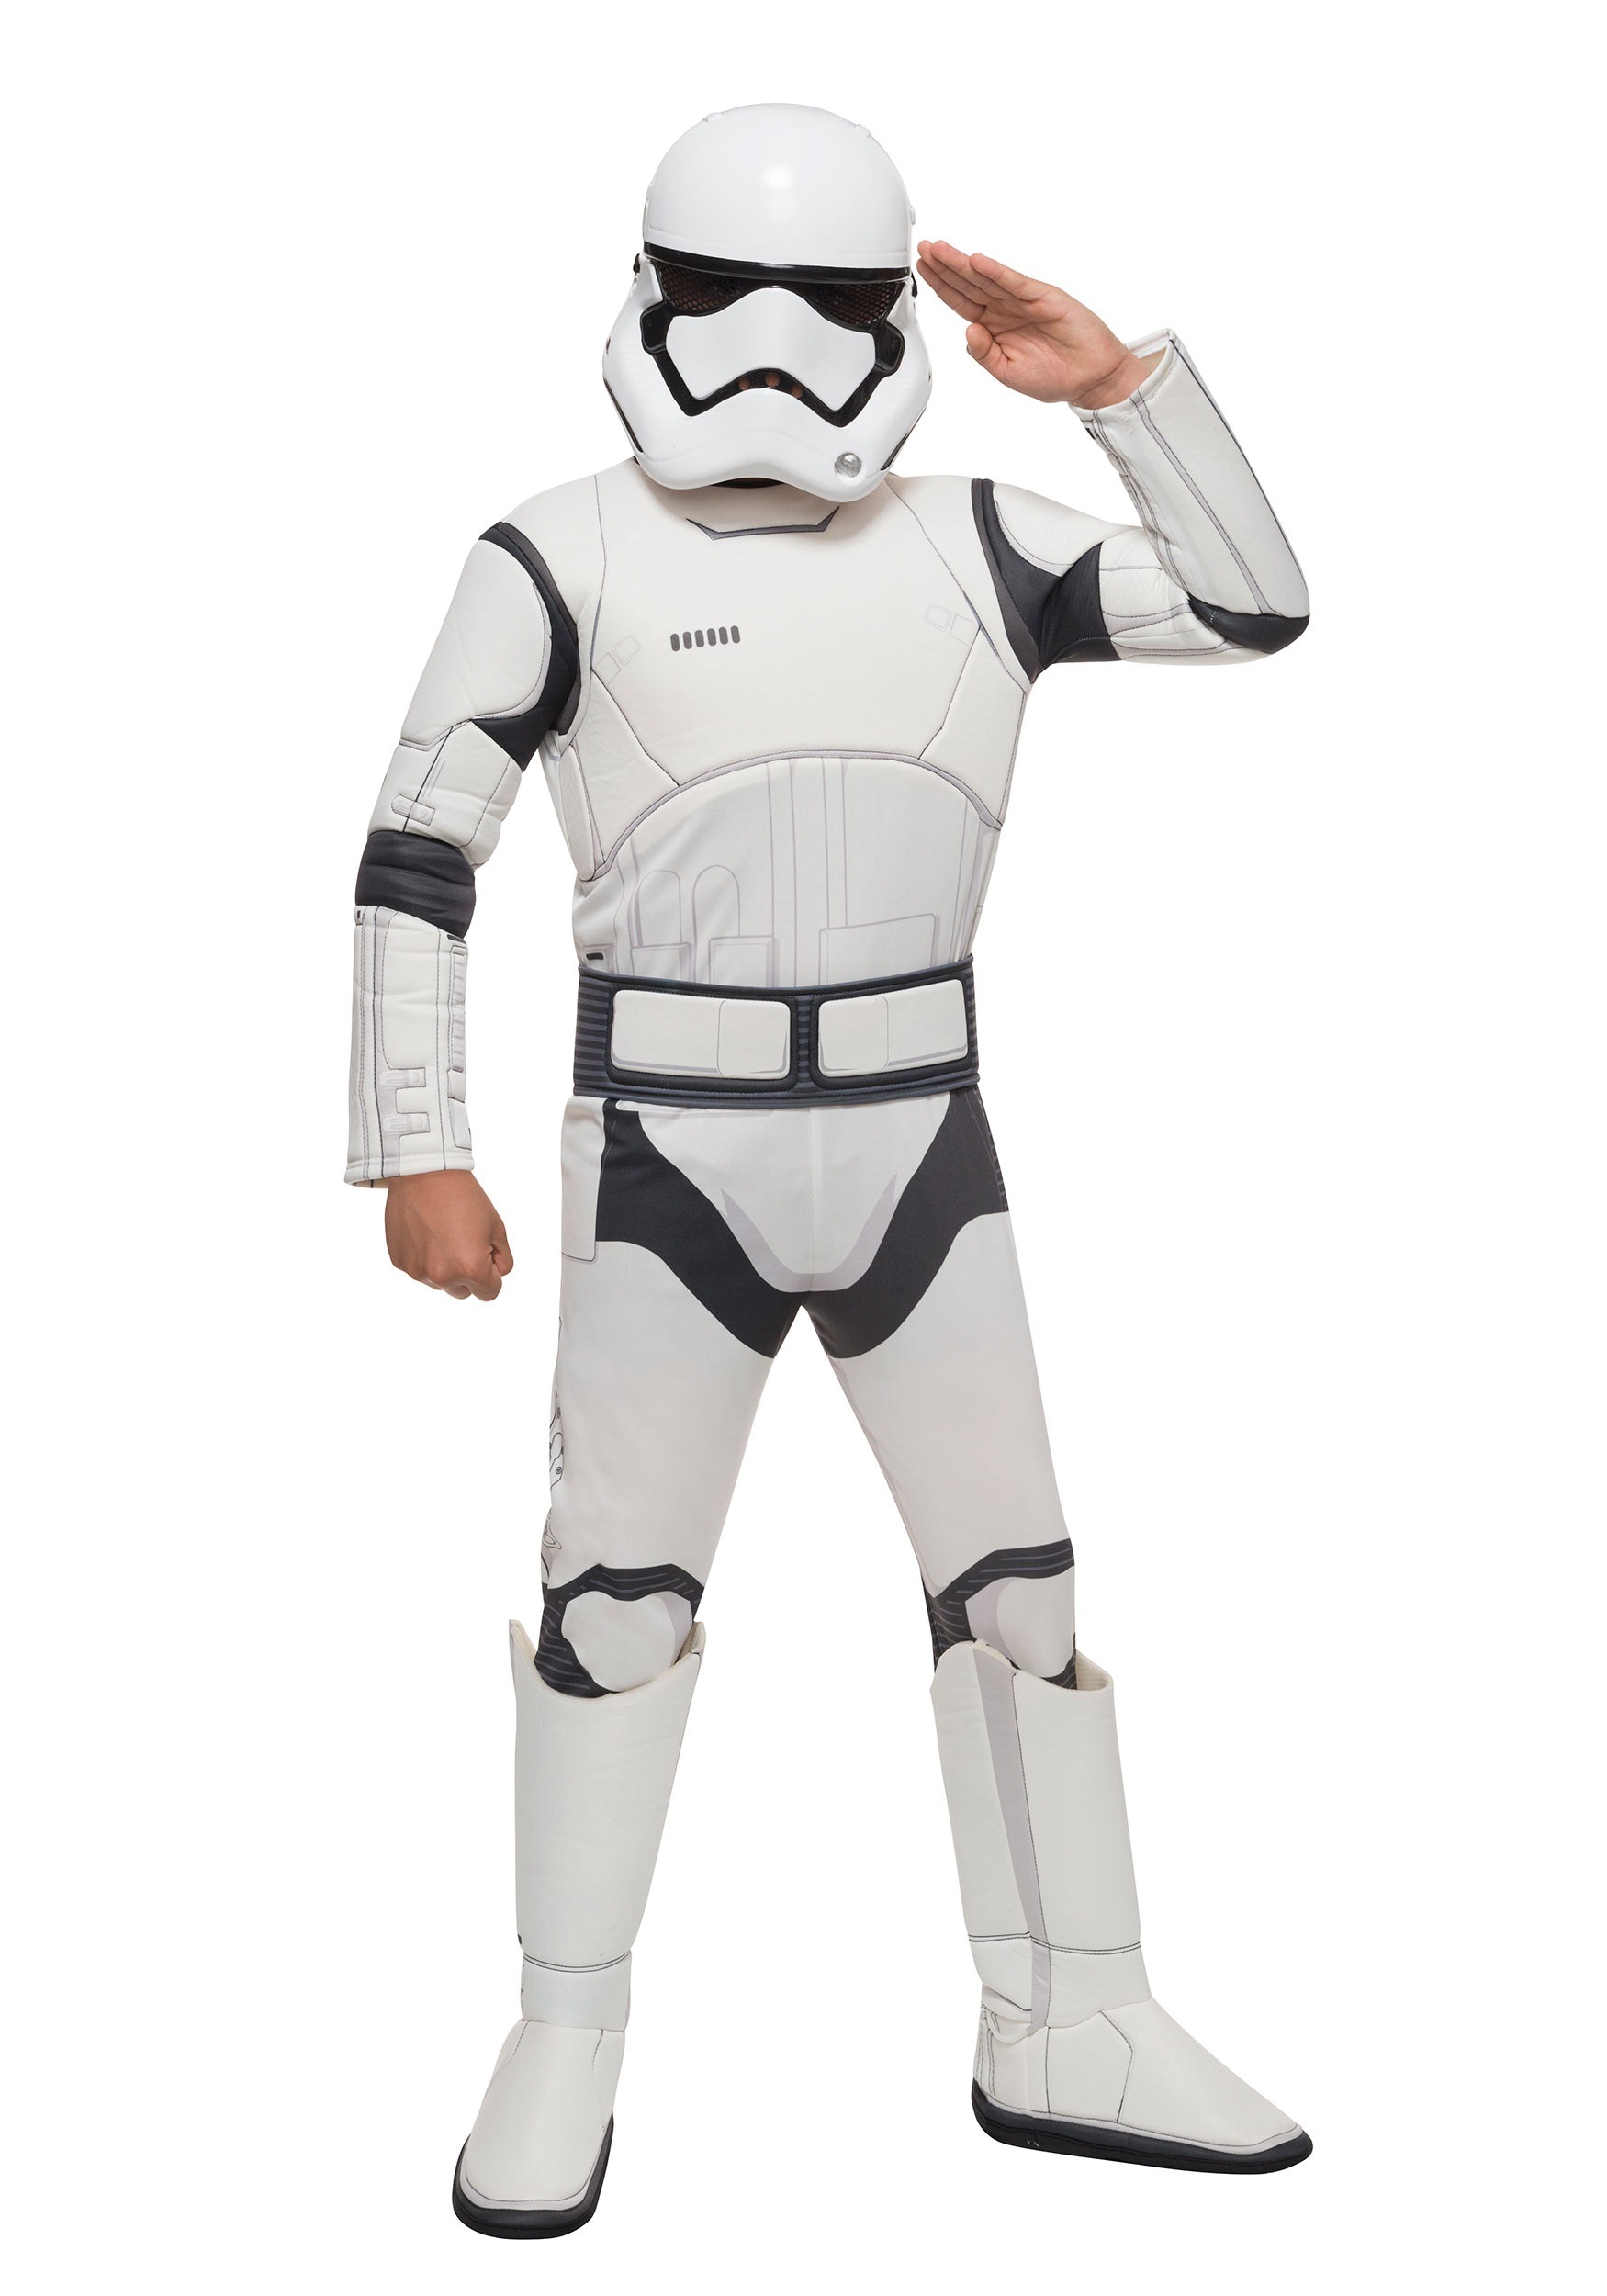 Star Wars Force Awakens Deluxe Child Stormtrooper Costume